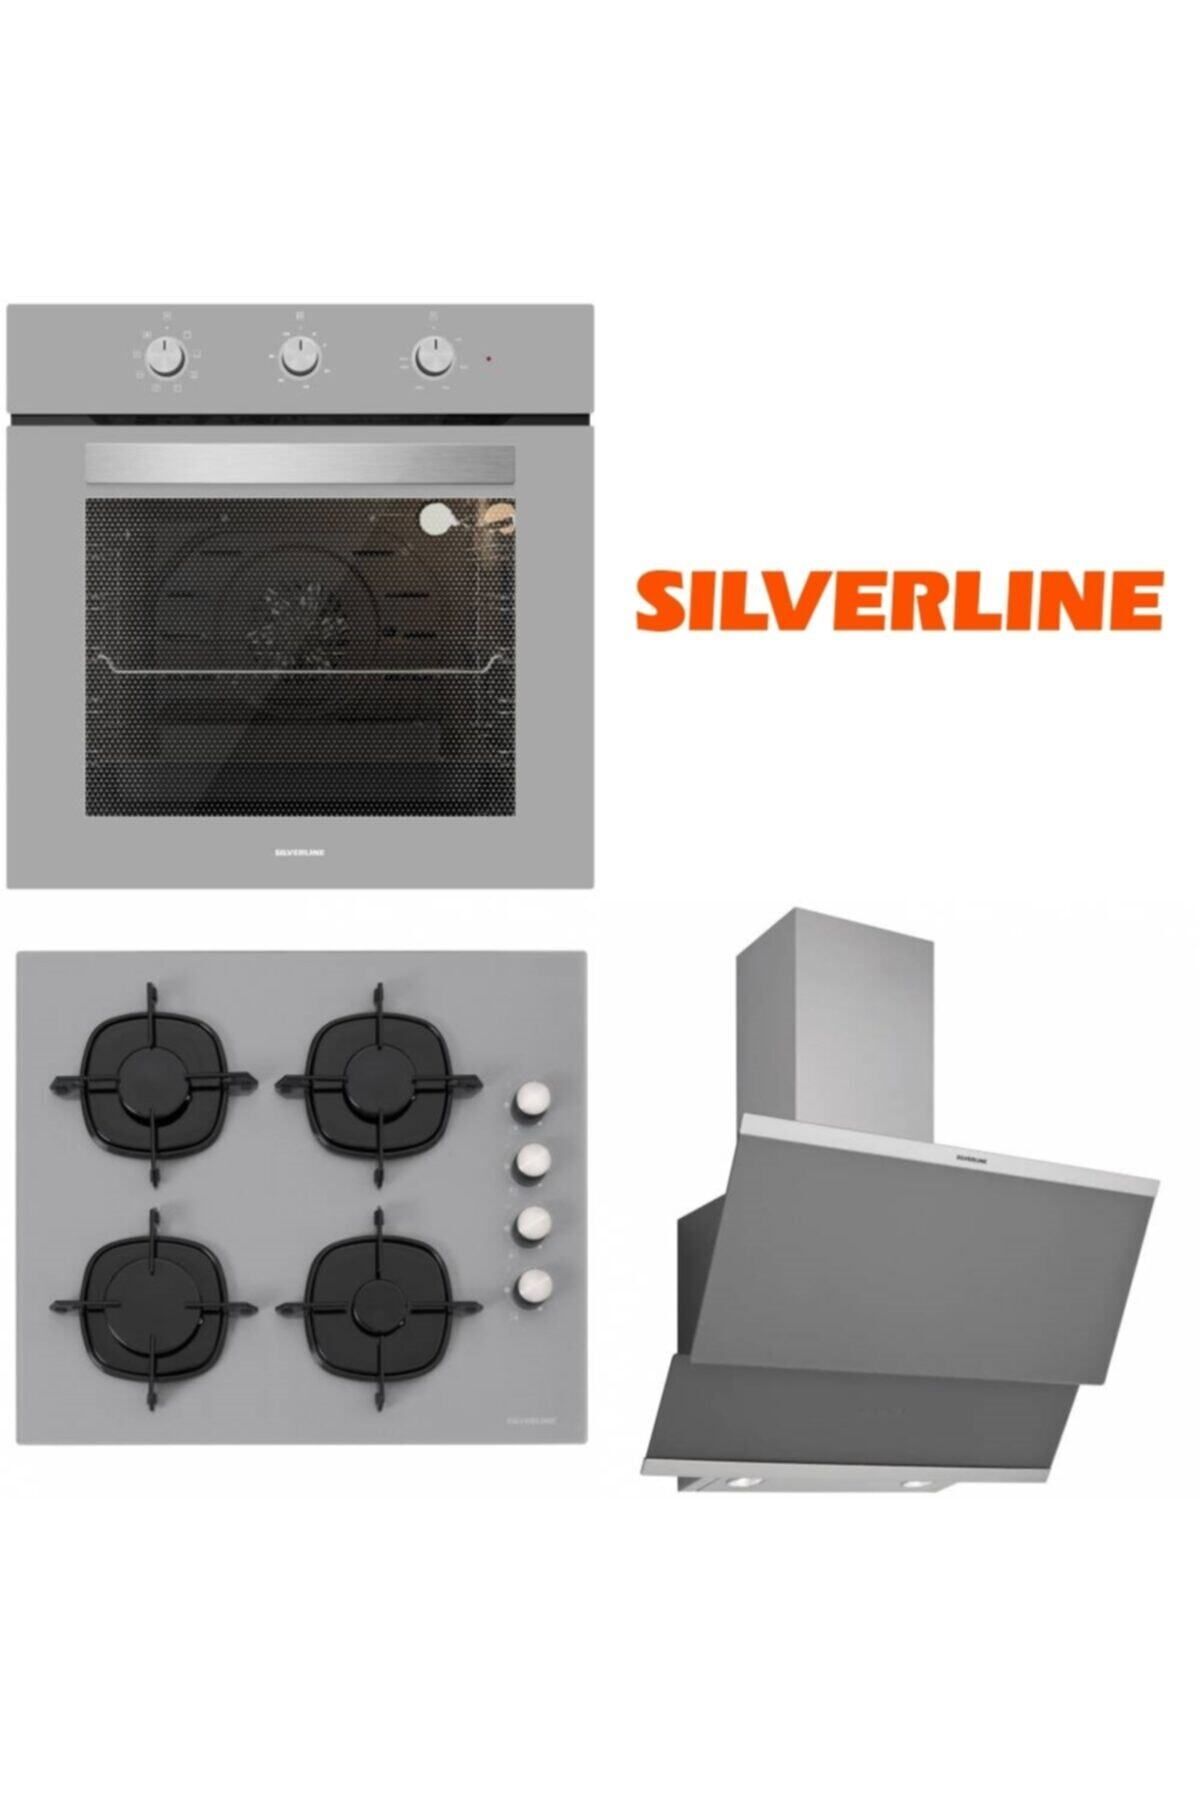 Silverline Bo6503s01 - Cs5335s01 - 3420 Classy 60 Gri Cam Ankastre Set